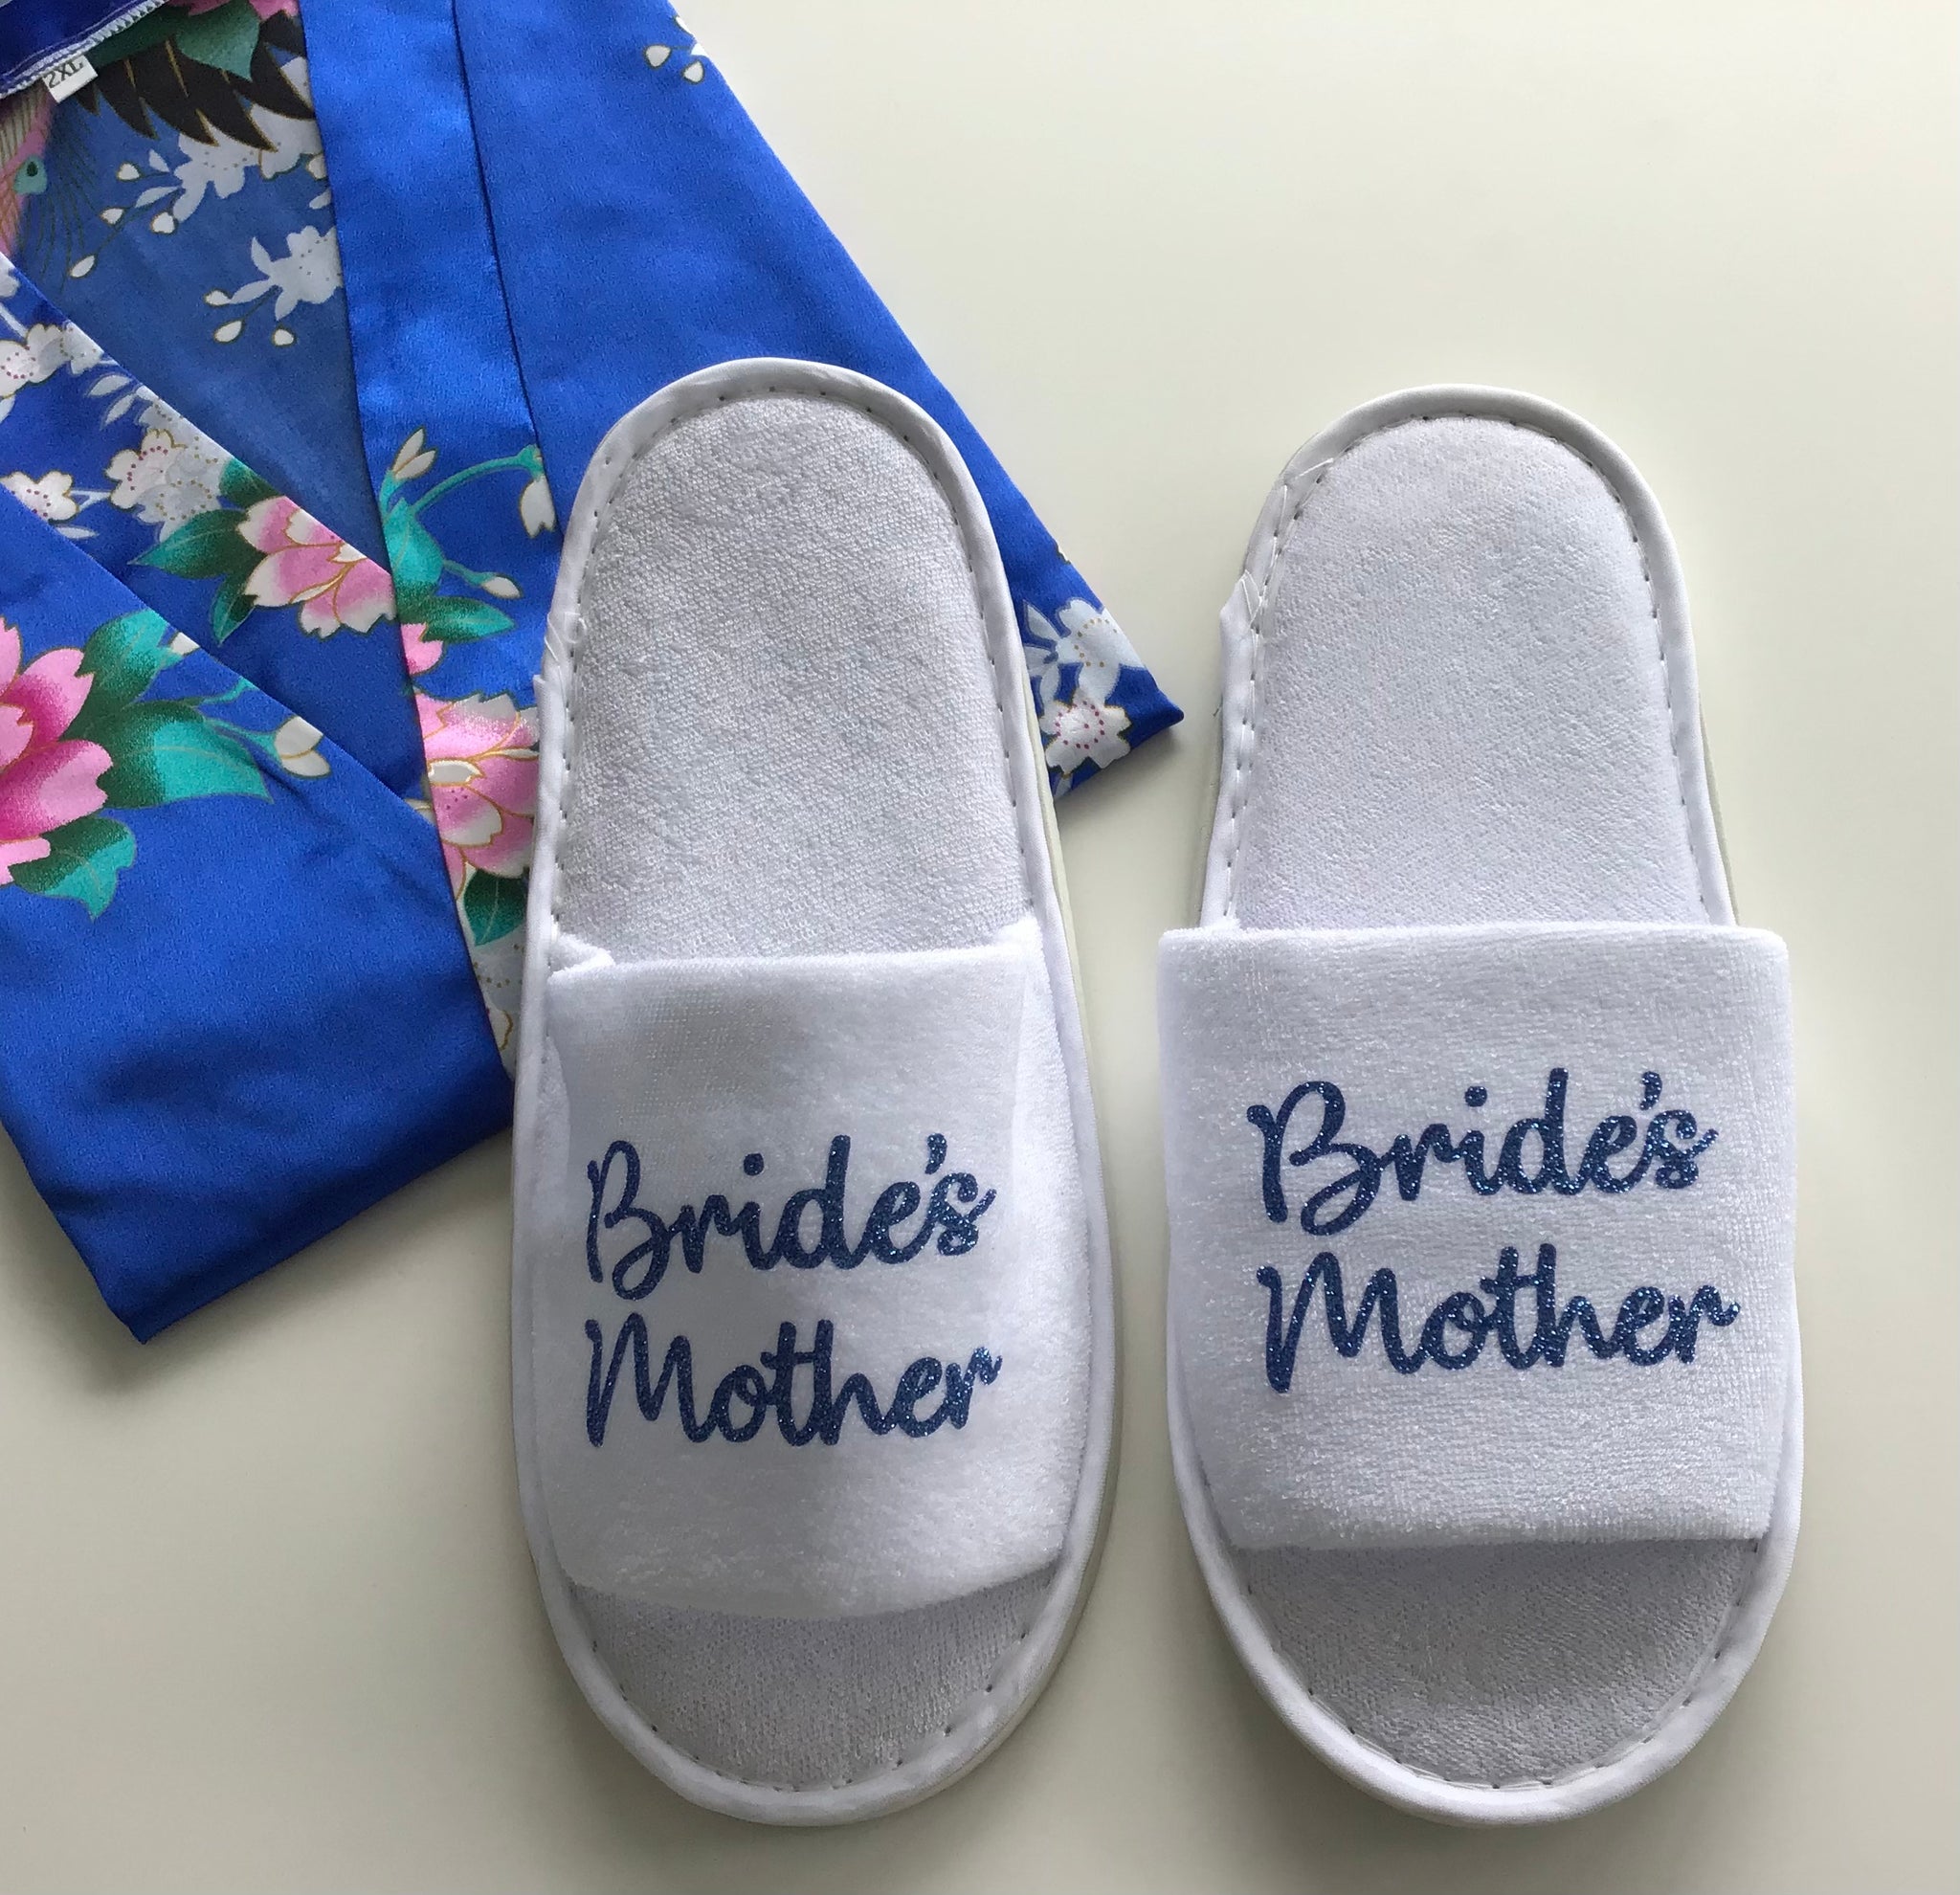 Bride's Mother Slippers - Blue Glitter Script, Style C Handmade